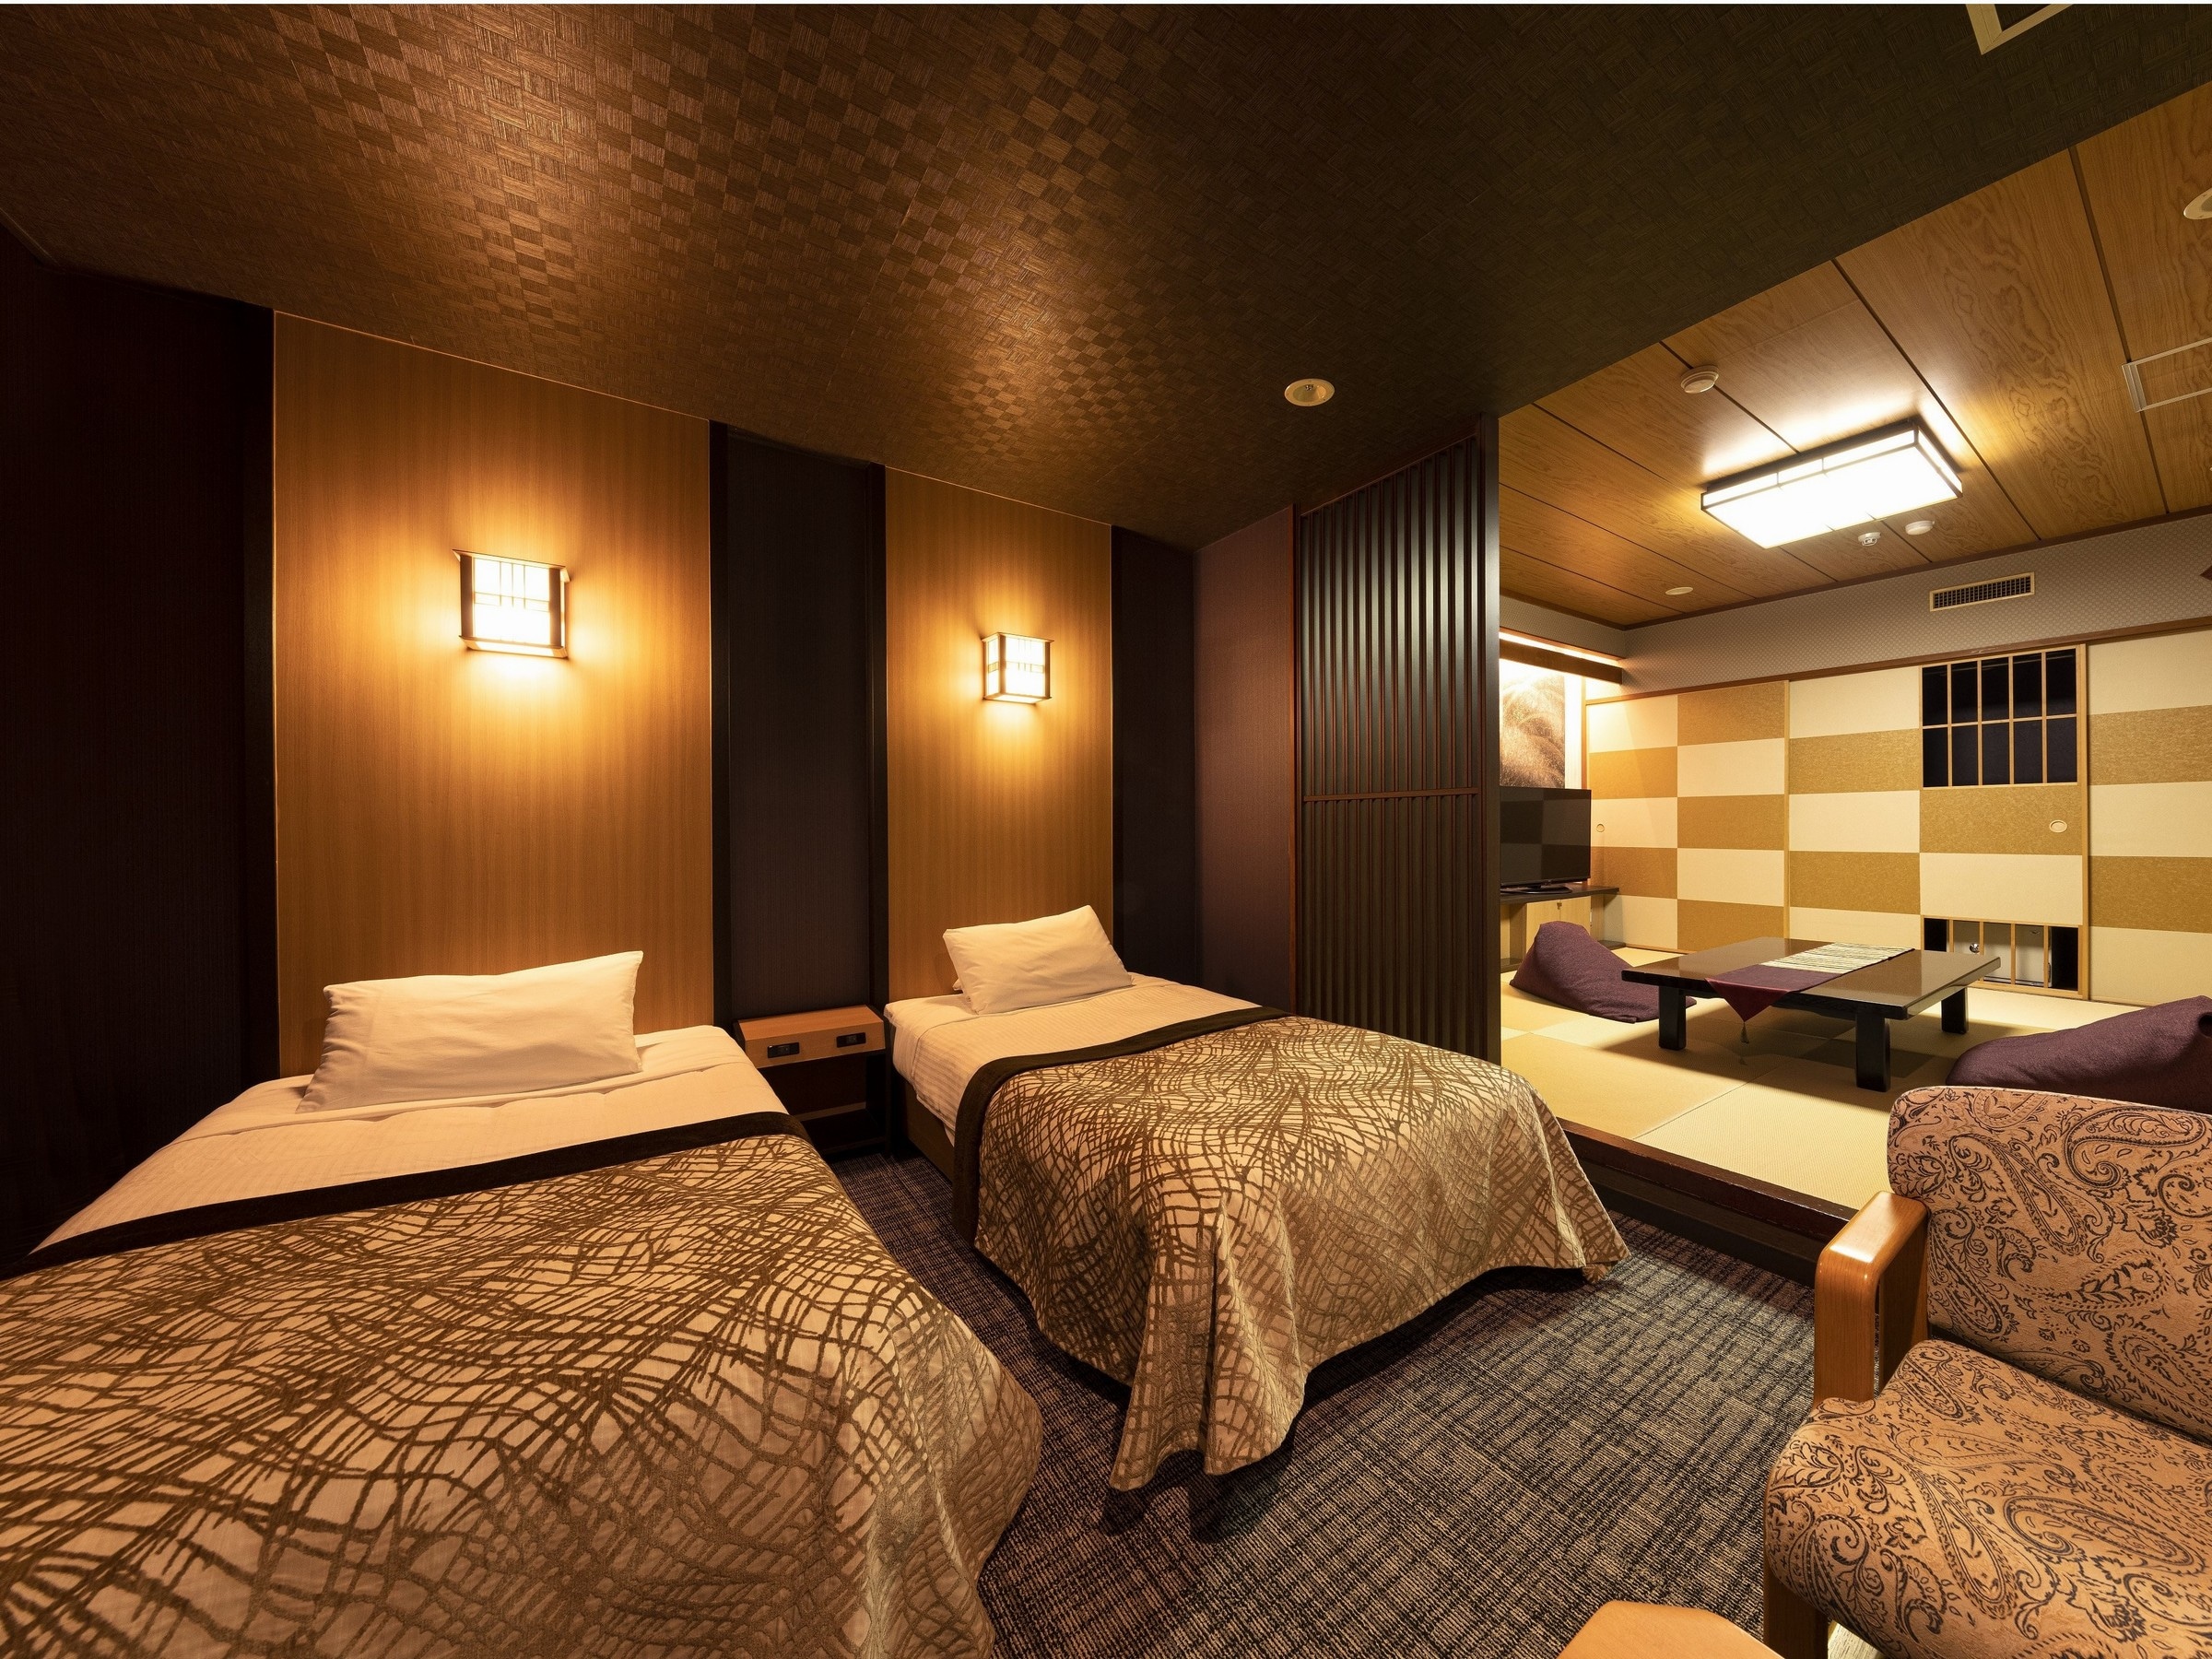 [Contoh kamar bergaya Jepang-Barat] Kamar bergaya Barat dengan 2 tempat tidur + Kamar bergaya Jepang dengan 6 tikar tatami atau lebih. Struktur yang berbeda untuk setiap kamar